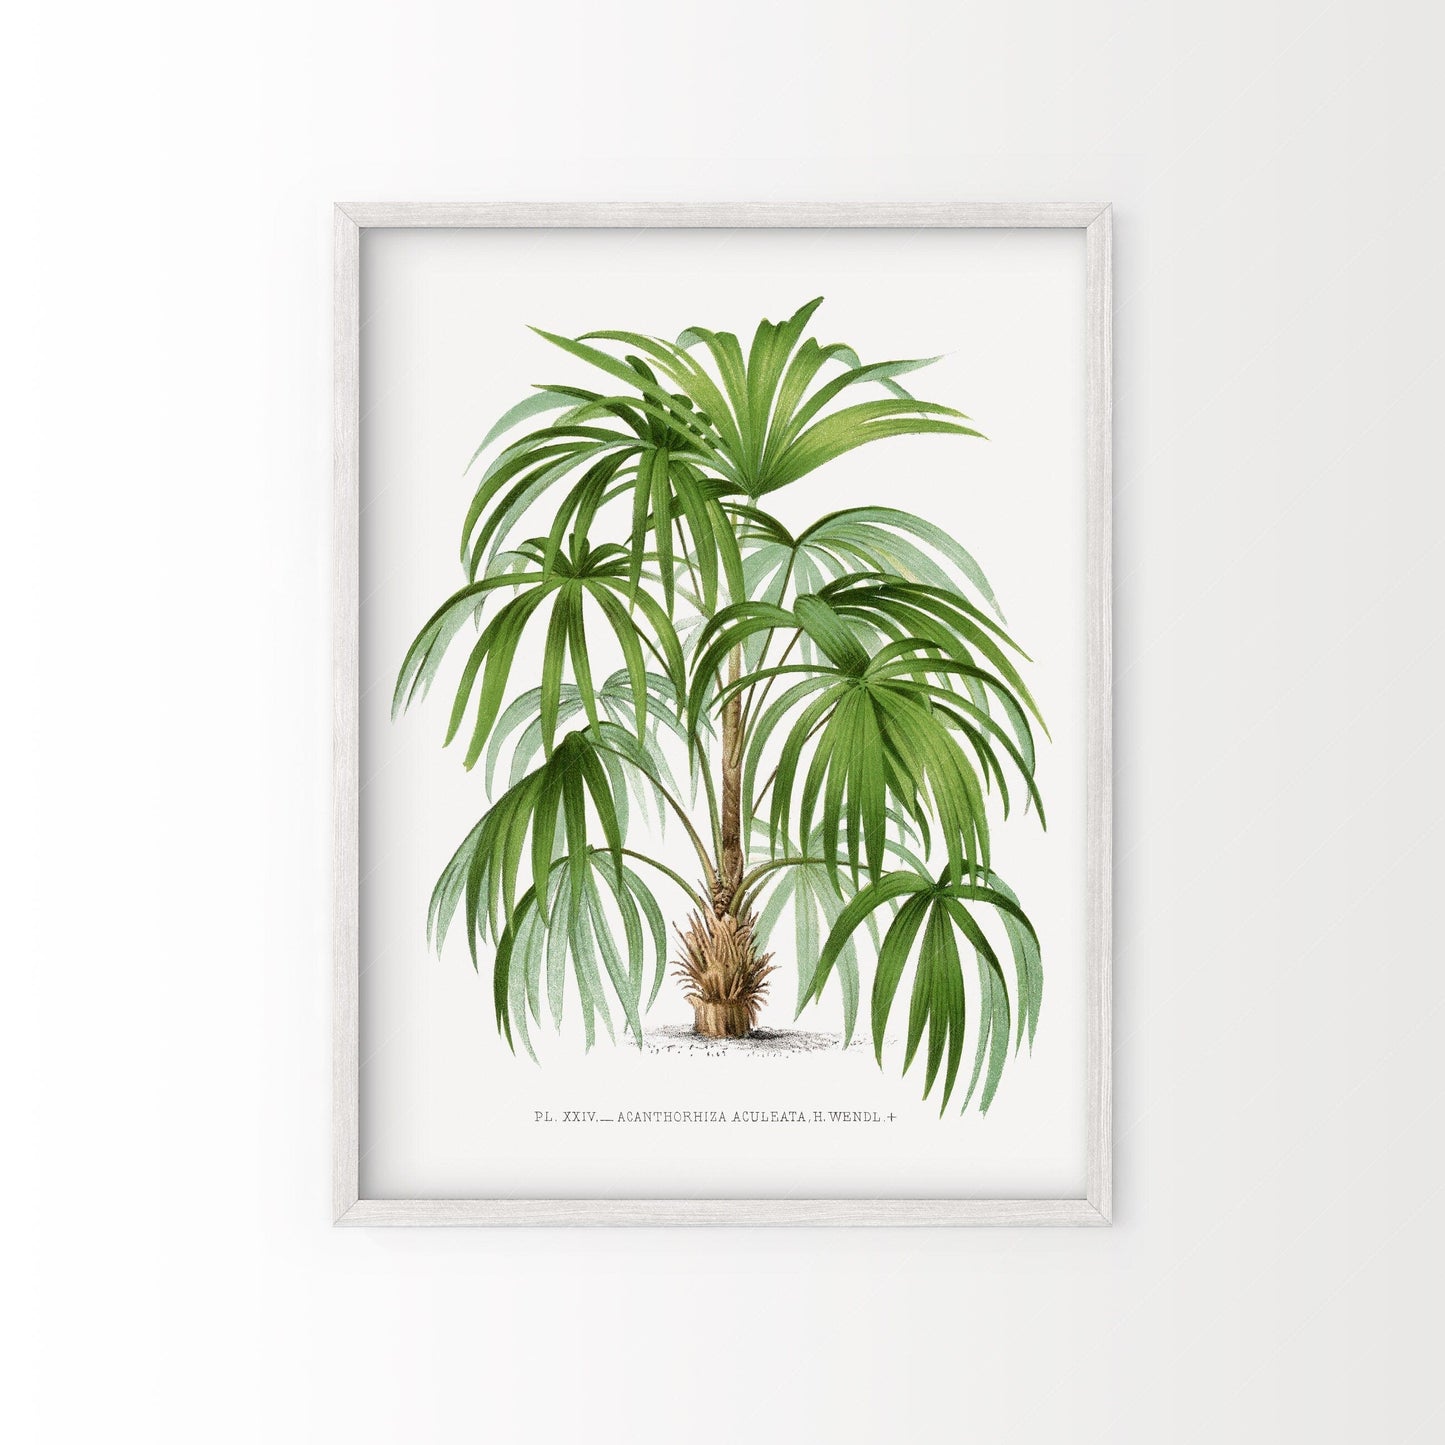 Home Poster Decor Palm Tree Vintage, Botanical Wall Art, Palm Leaves, Beach House Decor, Exotic Nature, Antique Coastal, Farmhouse Decor, Summer Tropical Boho